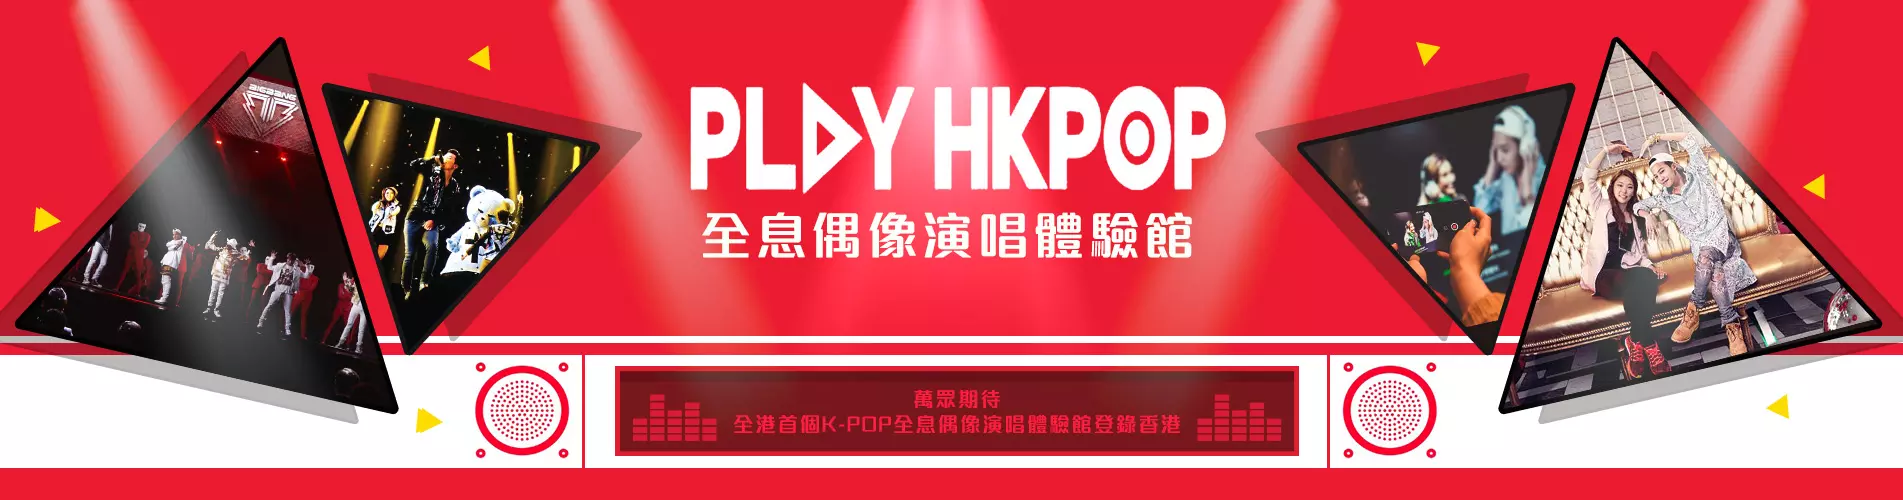 PLAY HKPOP 全息偶像演唱體驗館